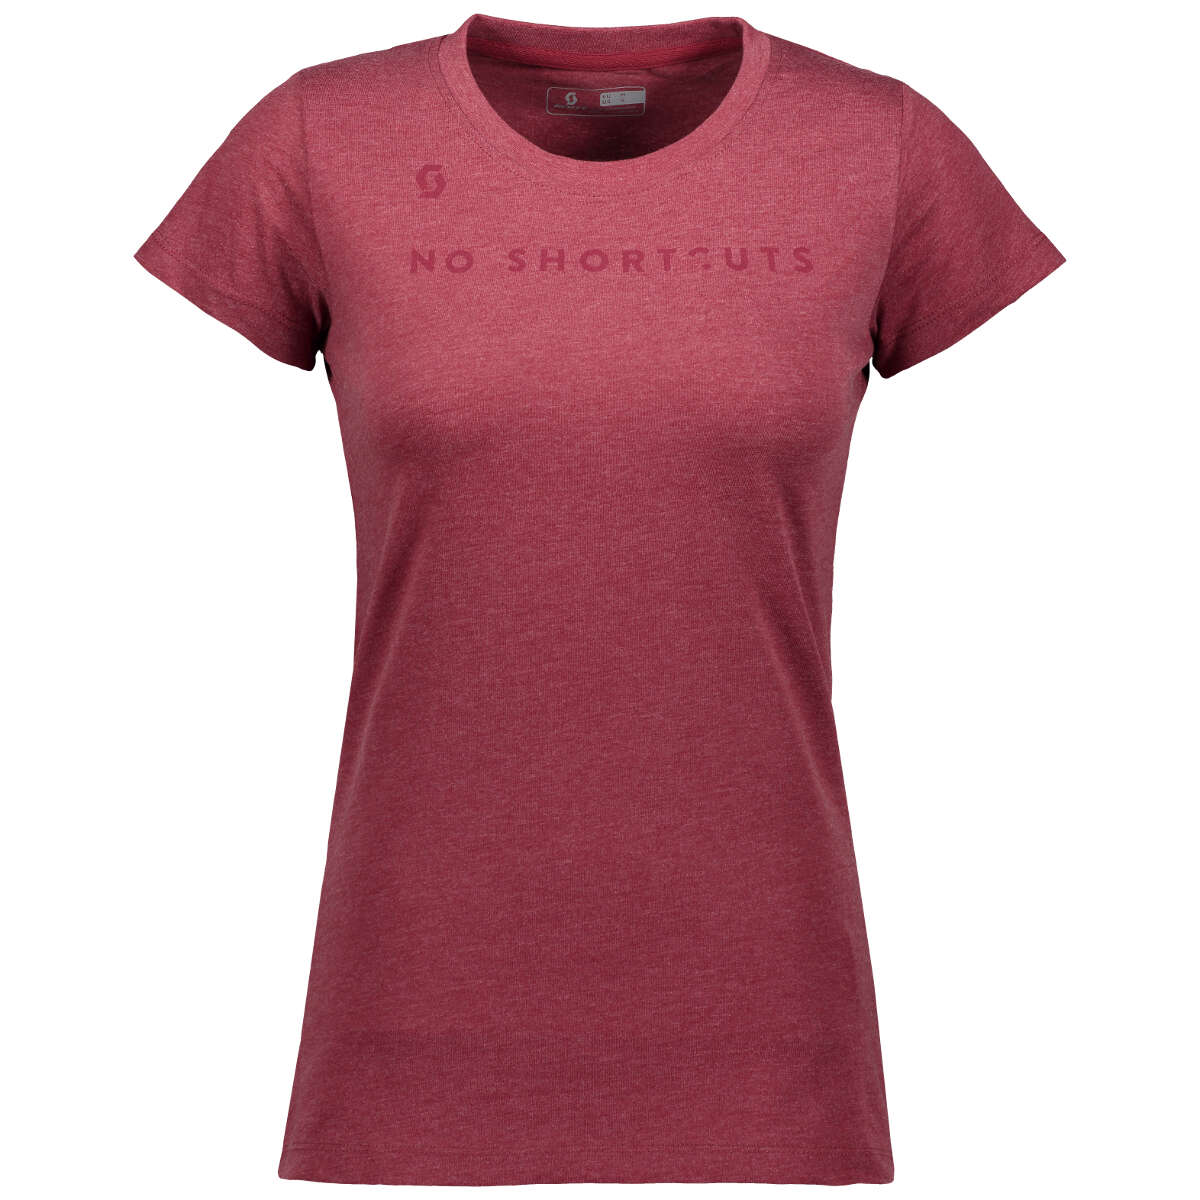 Scott Girls T-Shirt 10 No Shortcuts Tibetan Heather Red